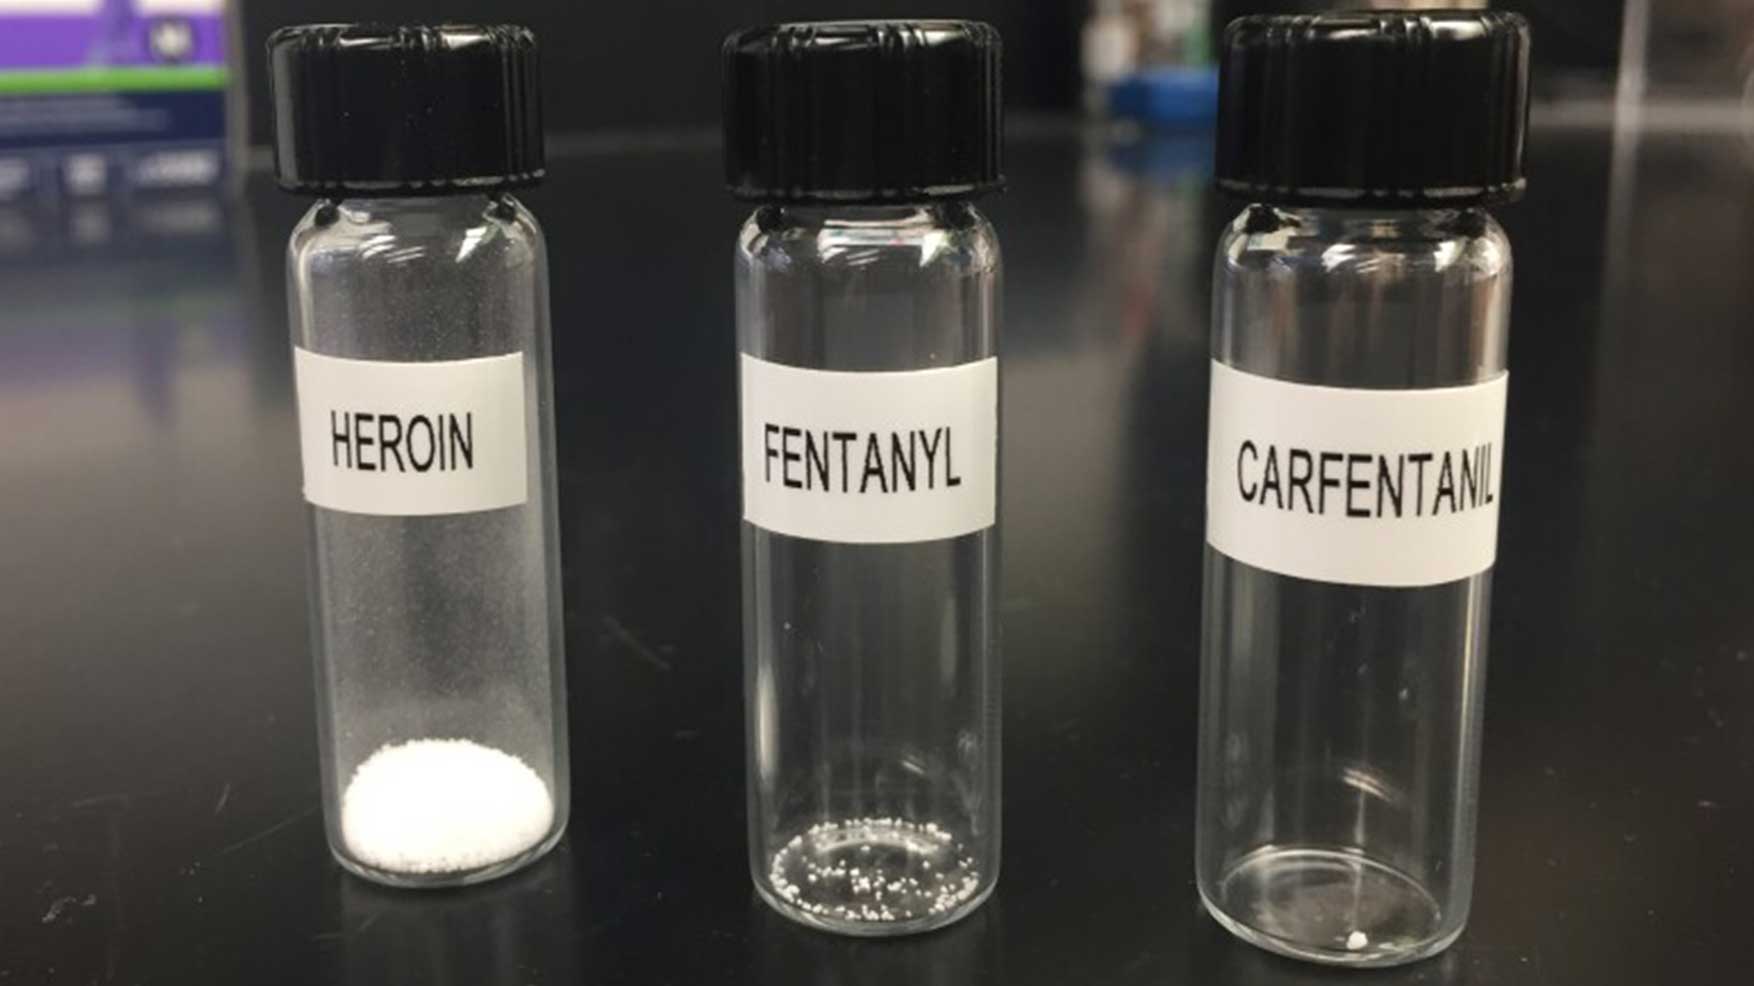 Carfentanil Vs. Fentanyl | Similarities, Differences, & Dangers